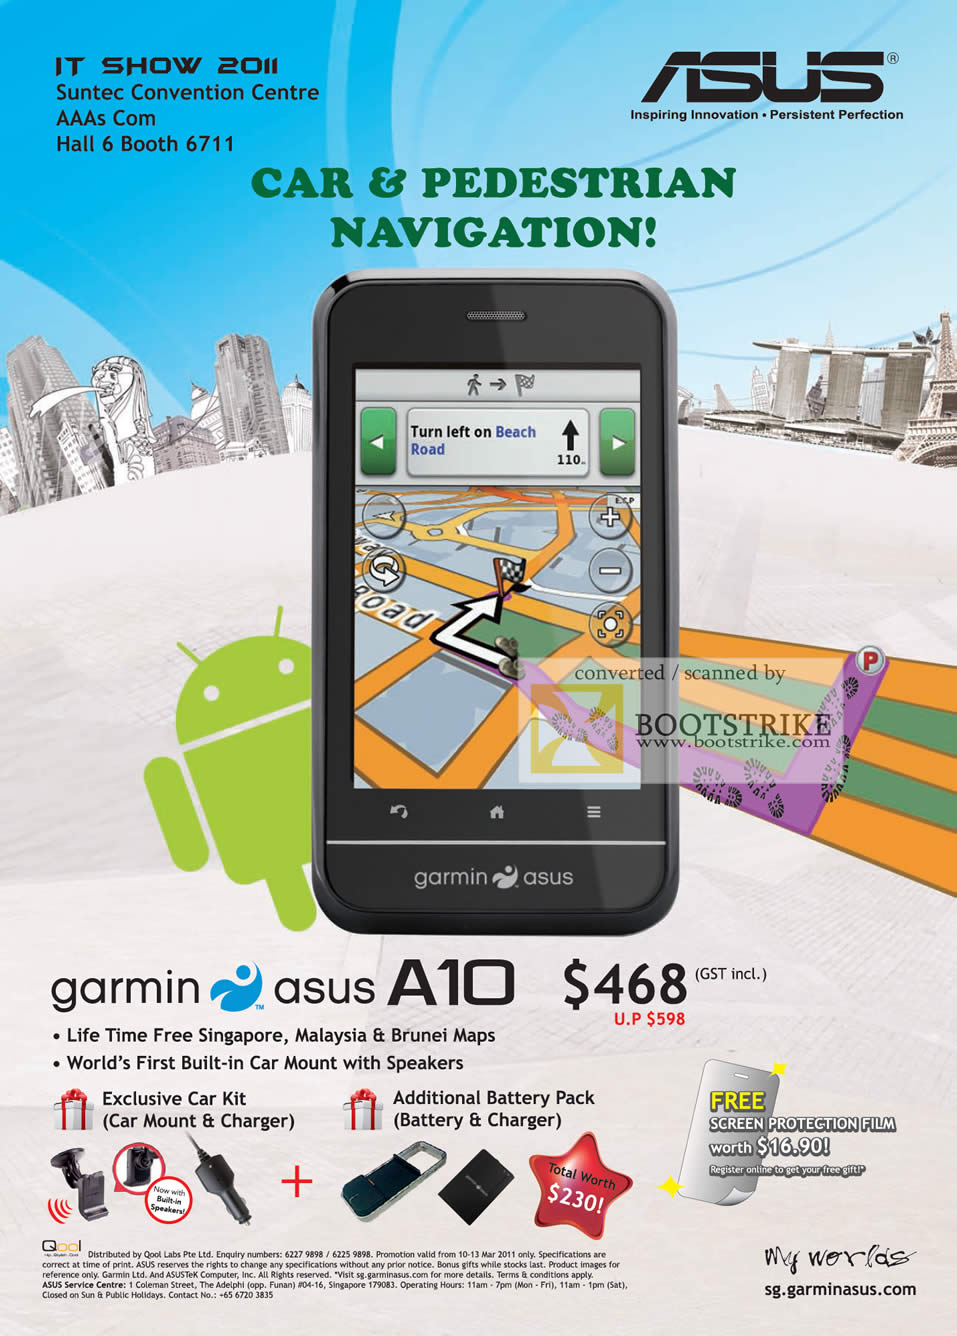 IT Show 2011 price list image brochure of AAAs Com Garmin ASUS A10 Car Pedestrian GPS Navigation